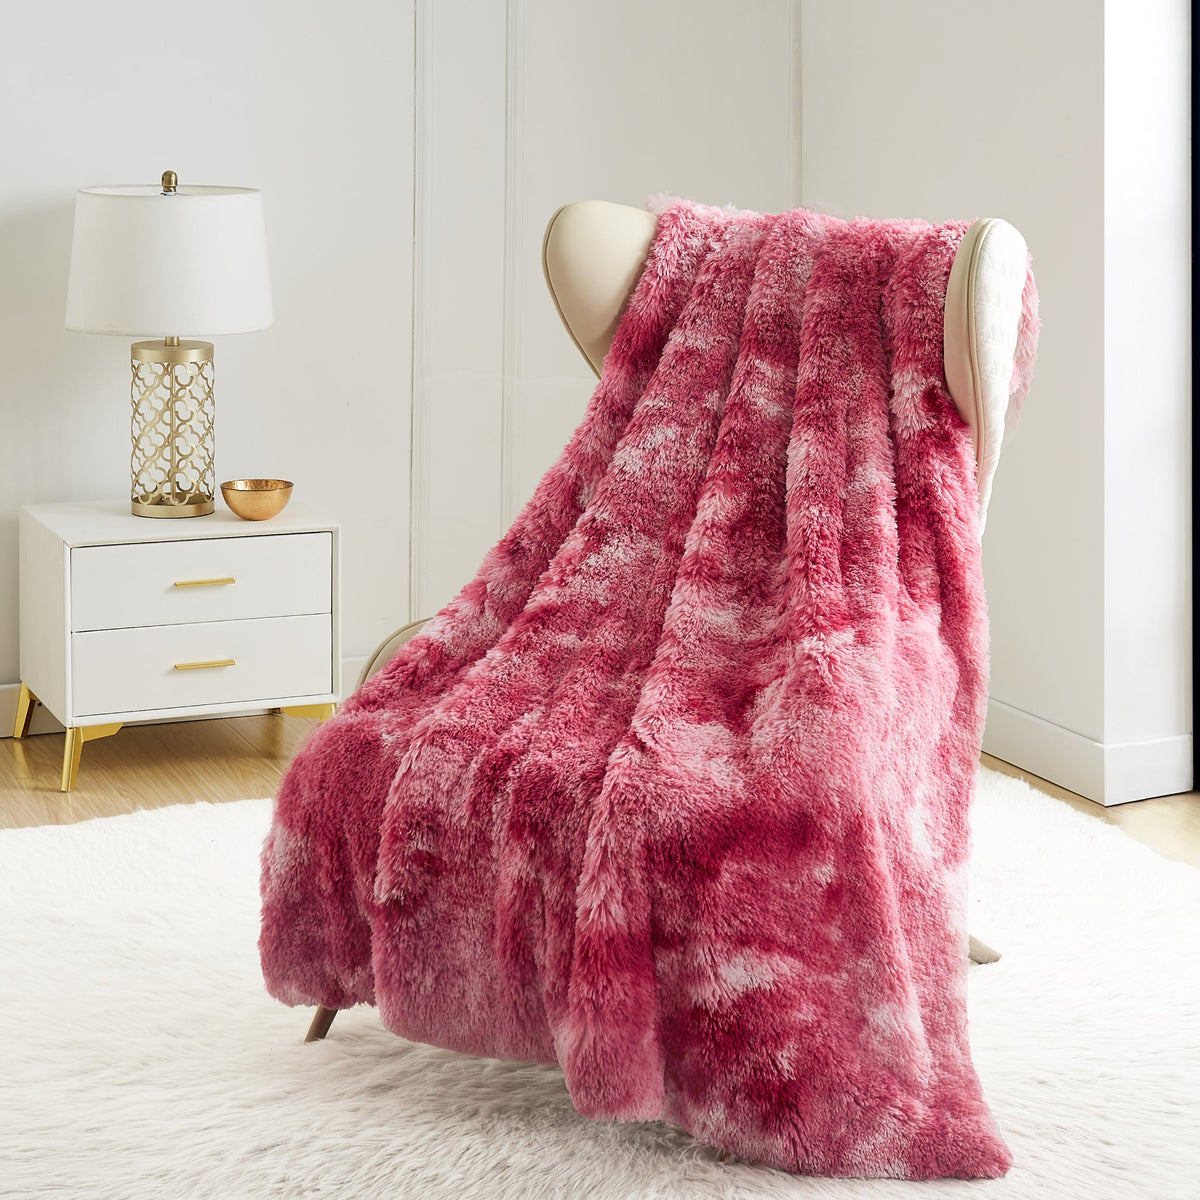 Juicy Couture Shaggy Faux Fur Plush Blanket Free Love Tie Dye